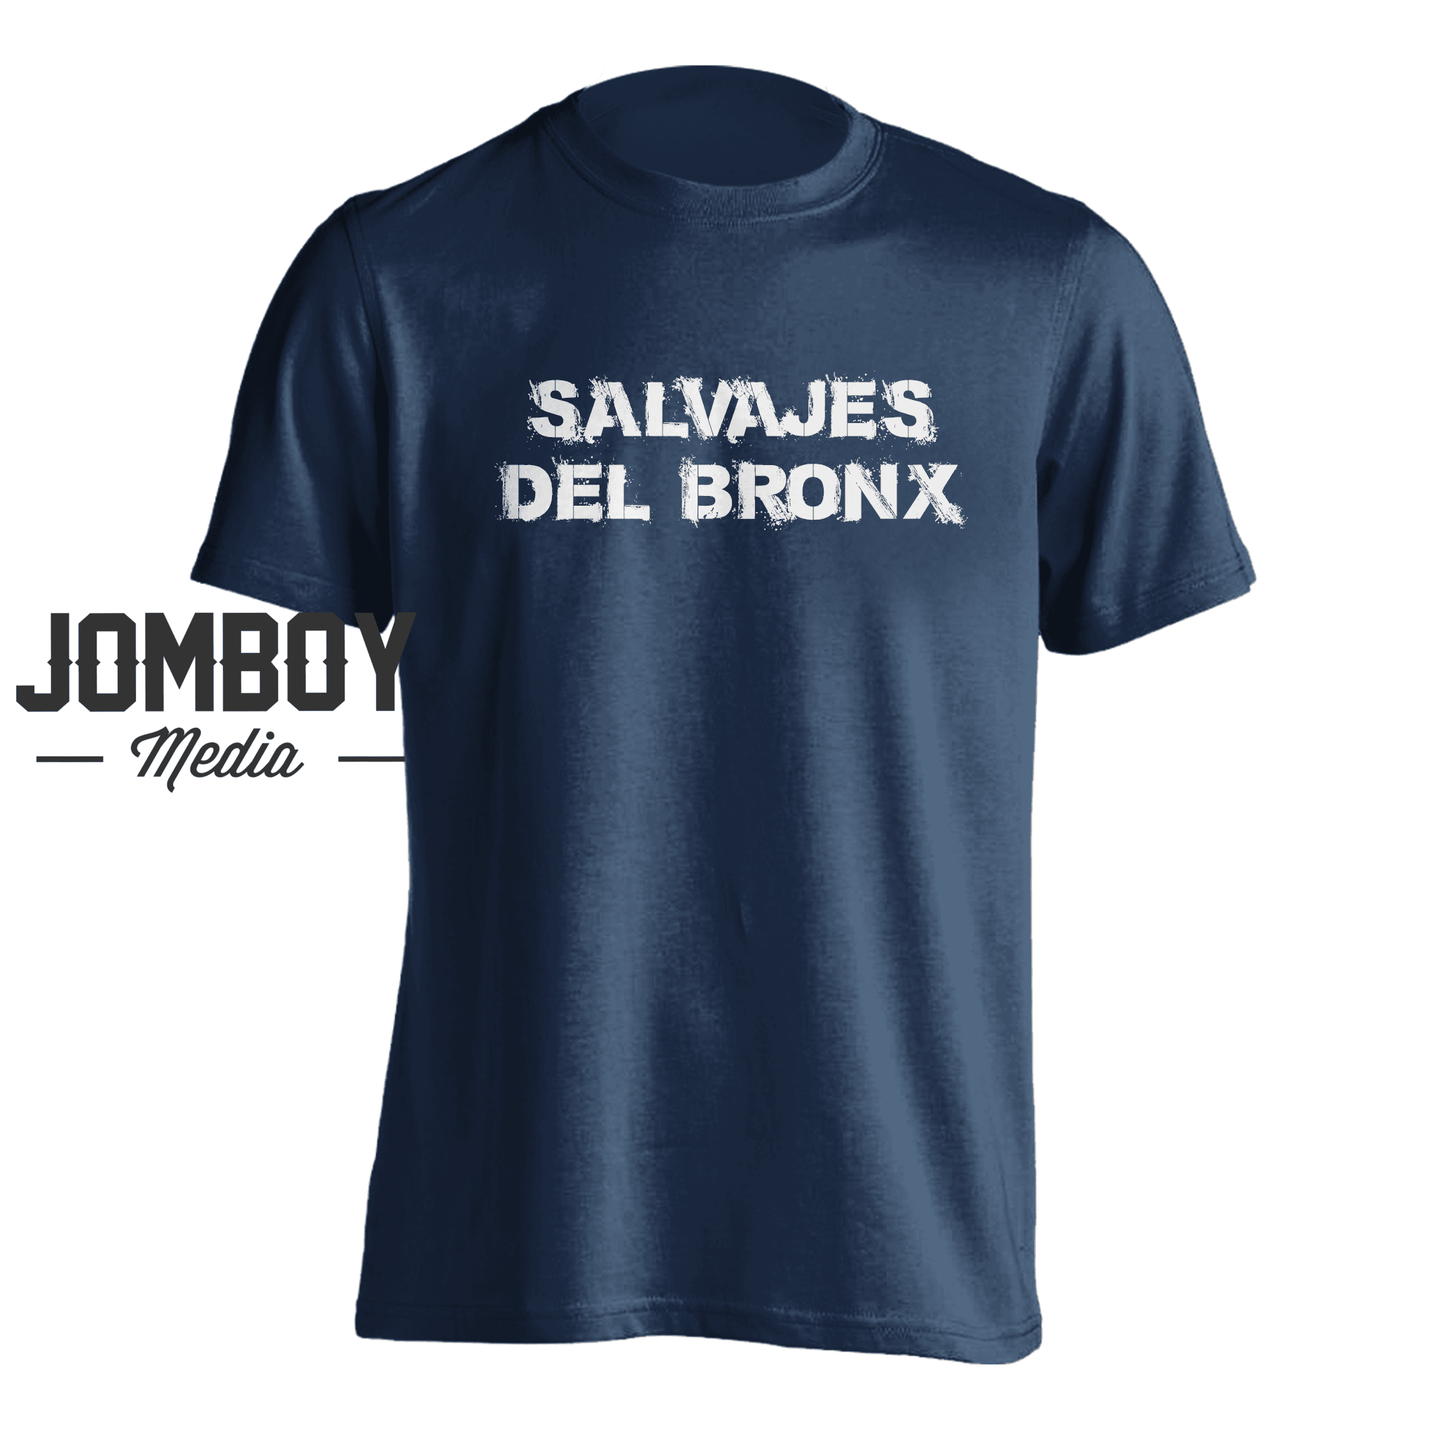 Salvajes Del Bronx! | T-Shirt - Jomboy Media